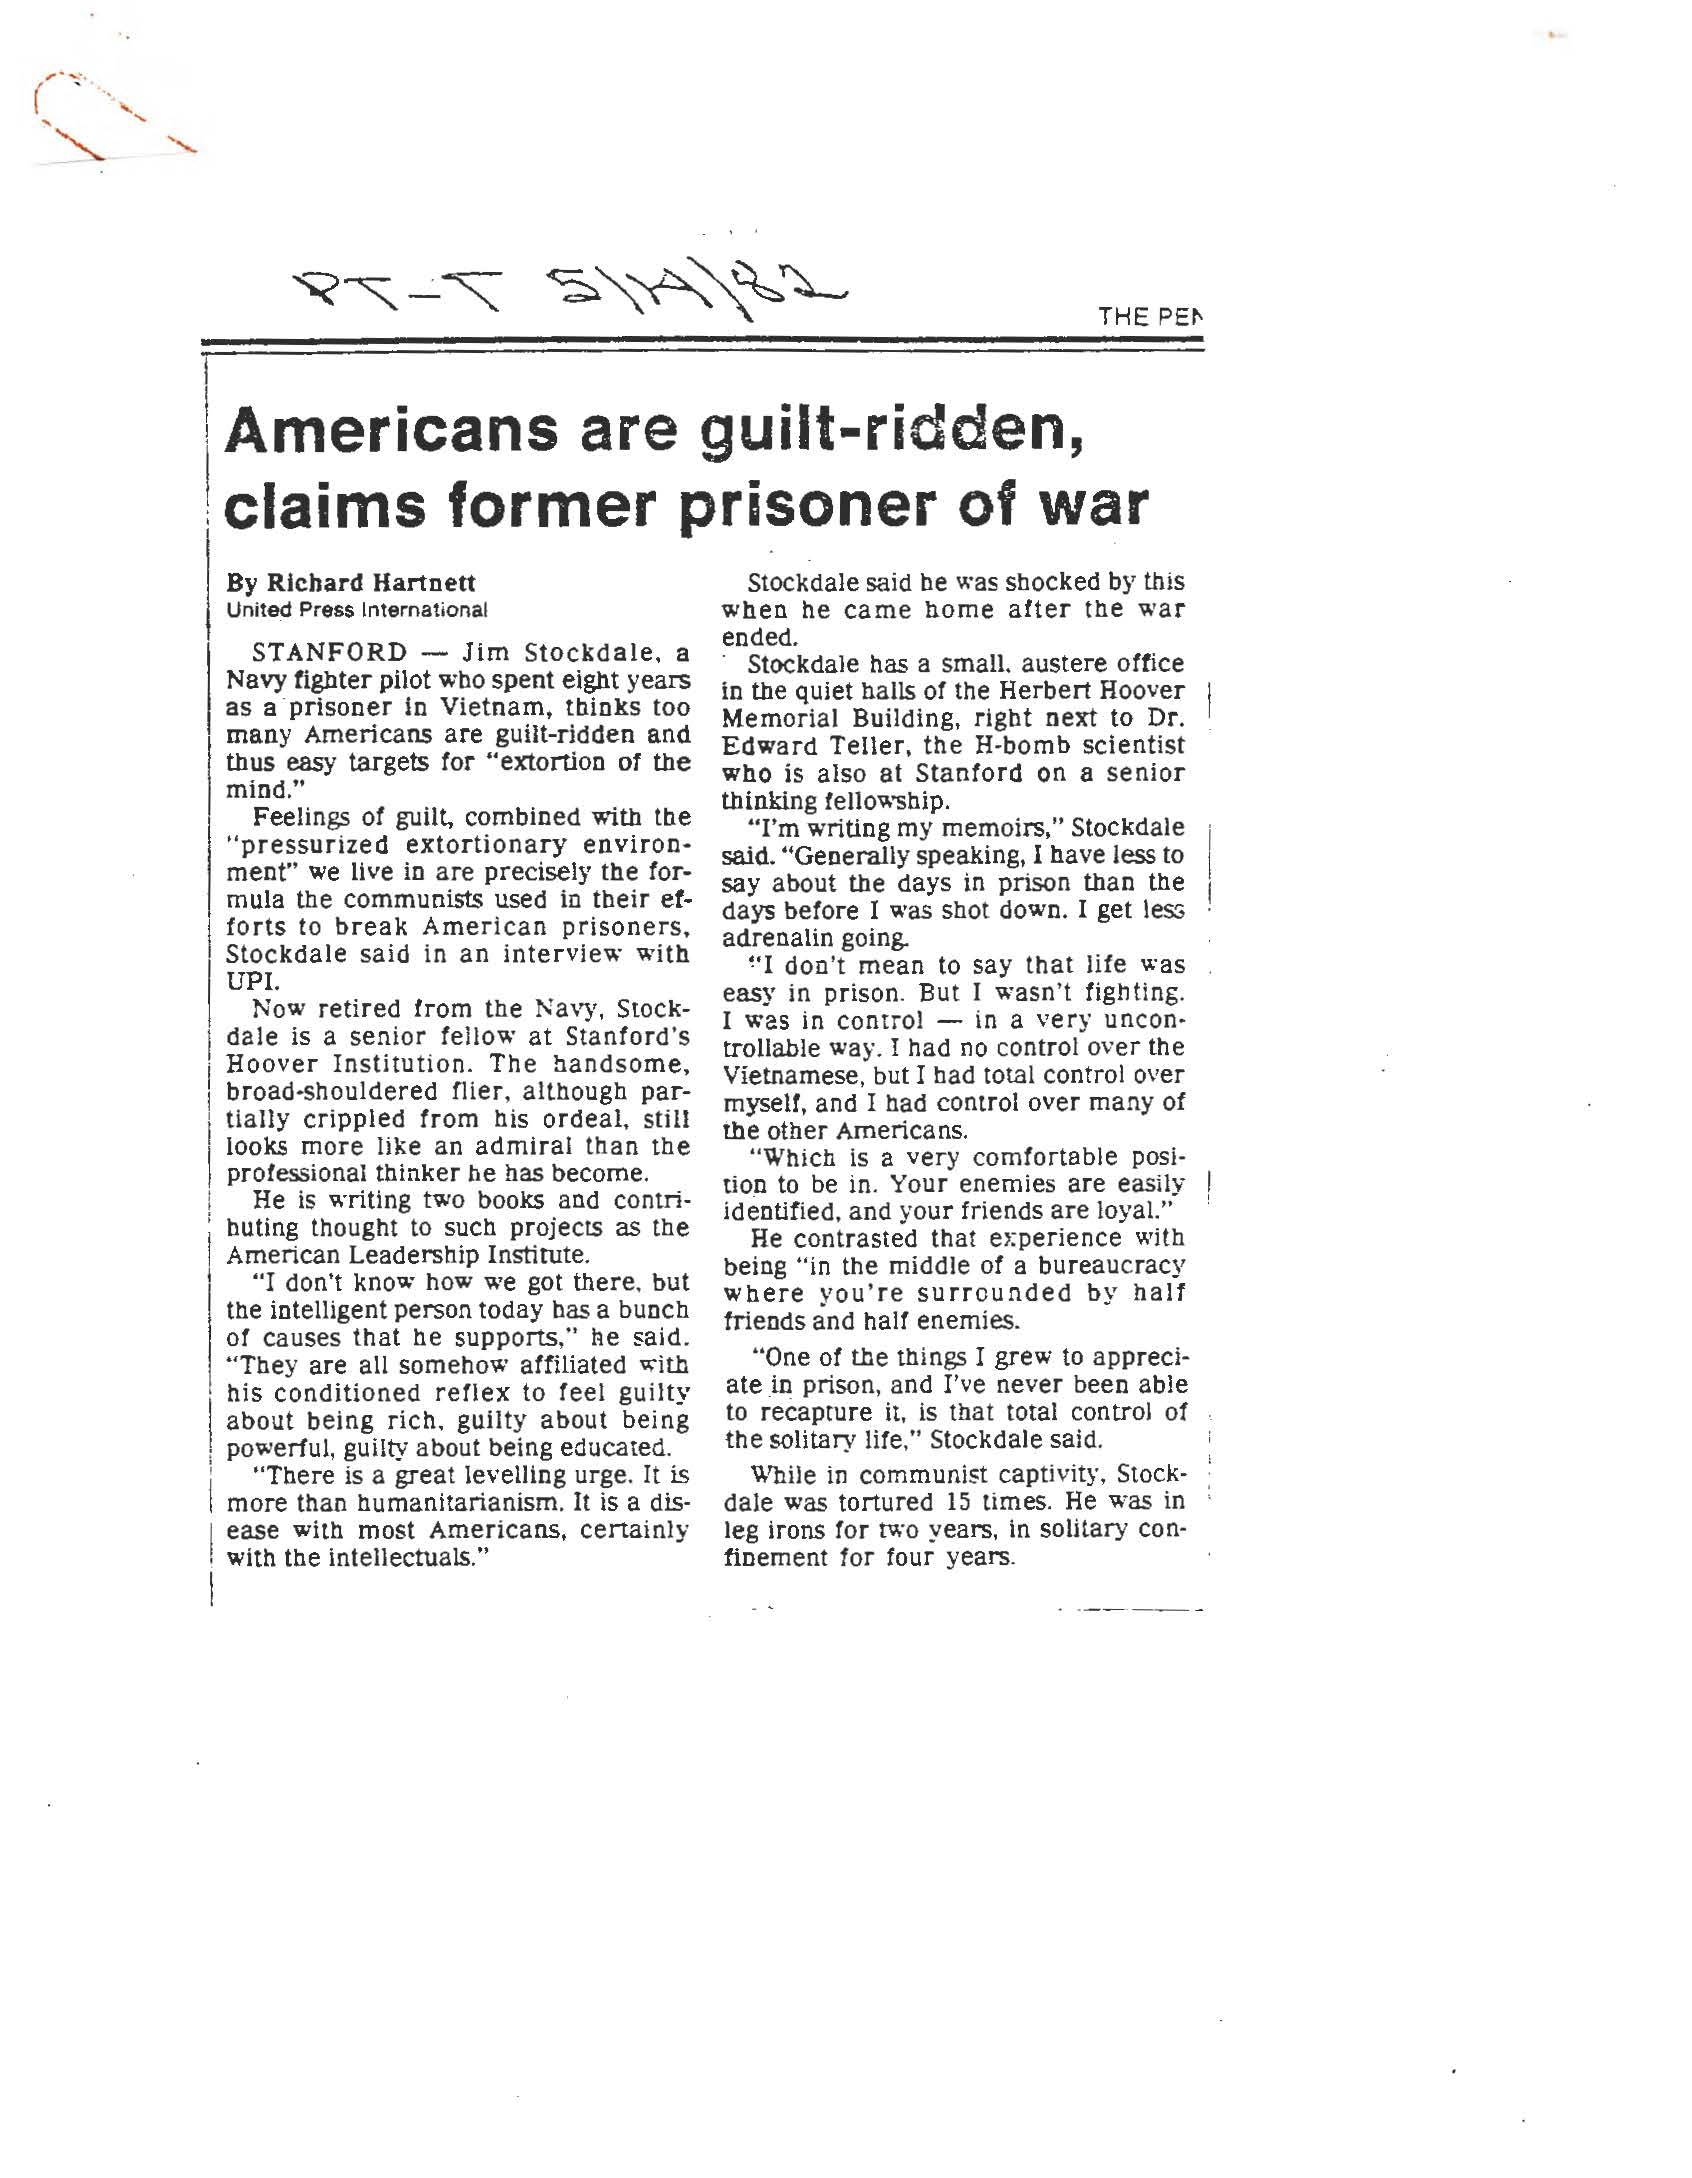 &quot;Americans are guilt-ridden, claims former prisoner of war,&quot; by Richard Hartnett